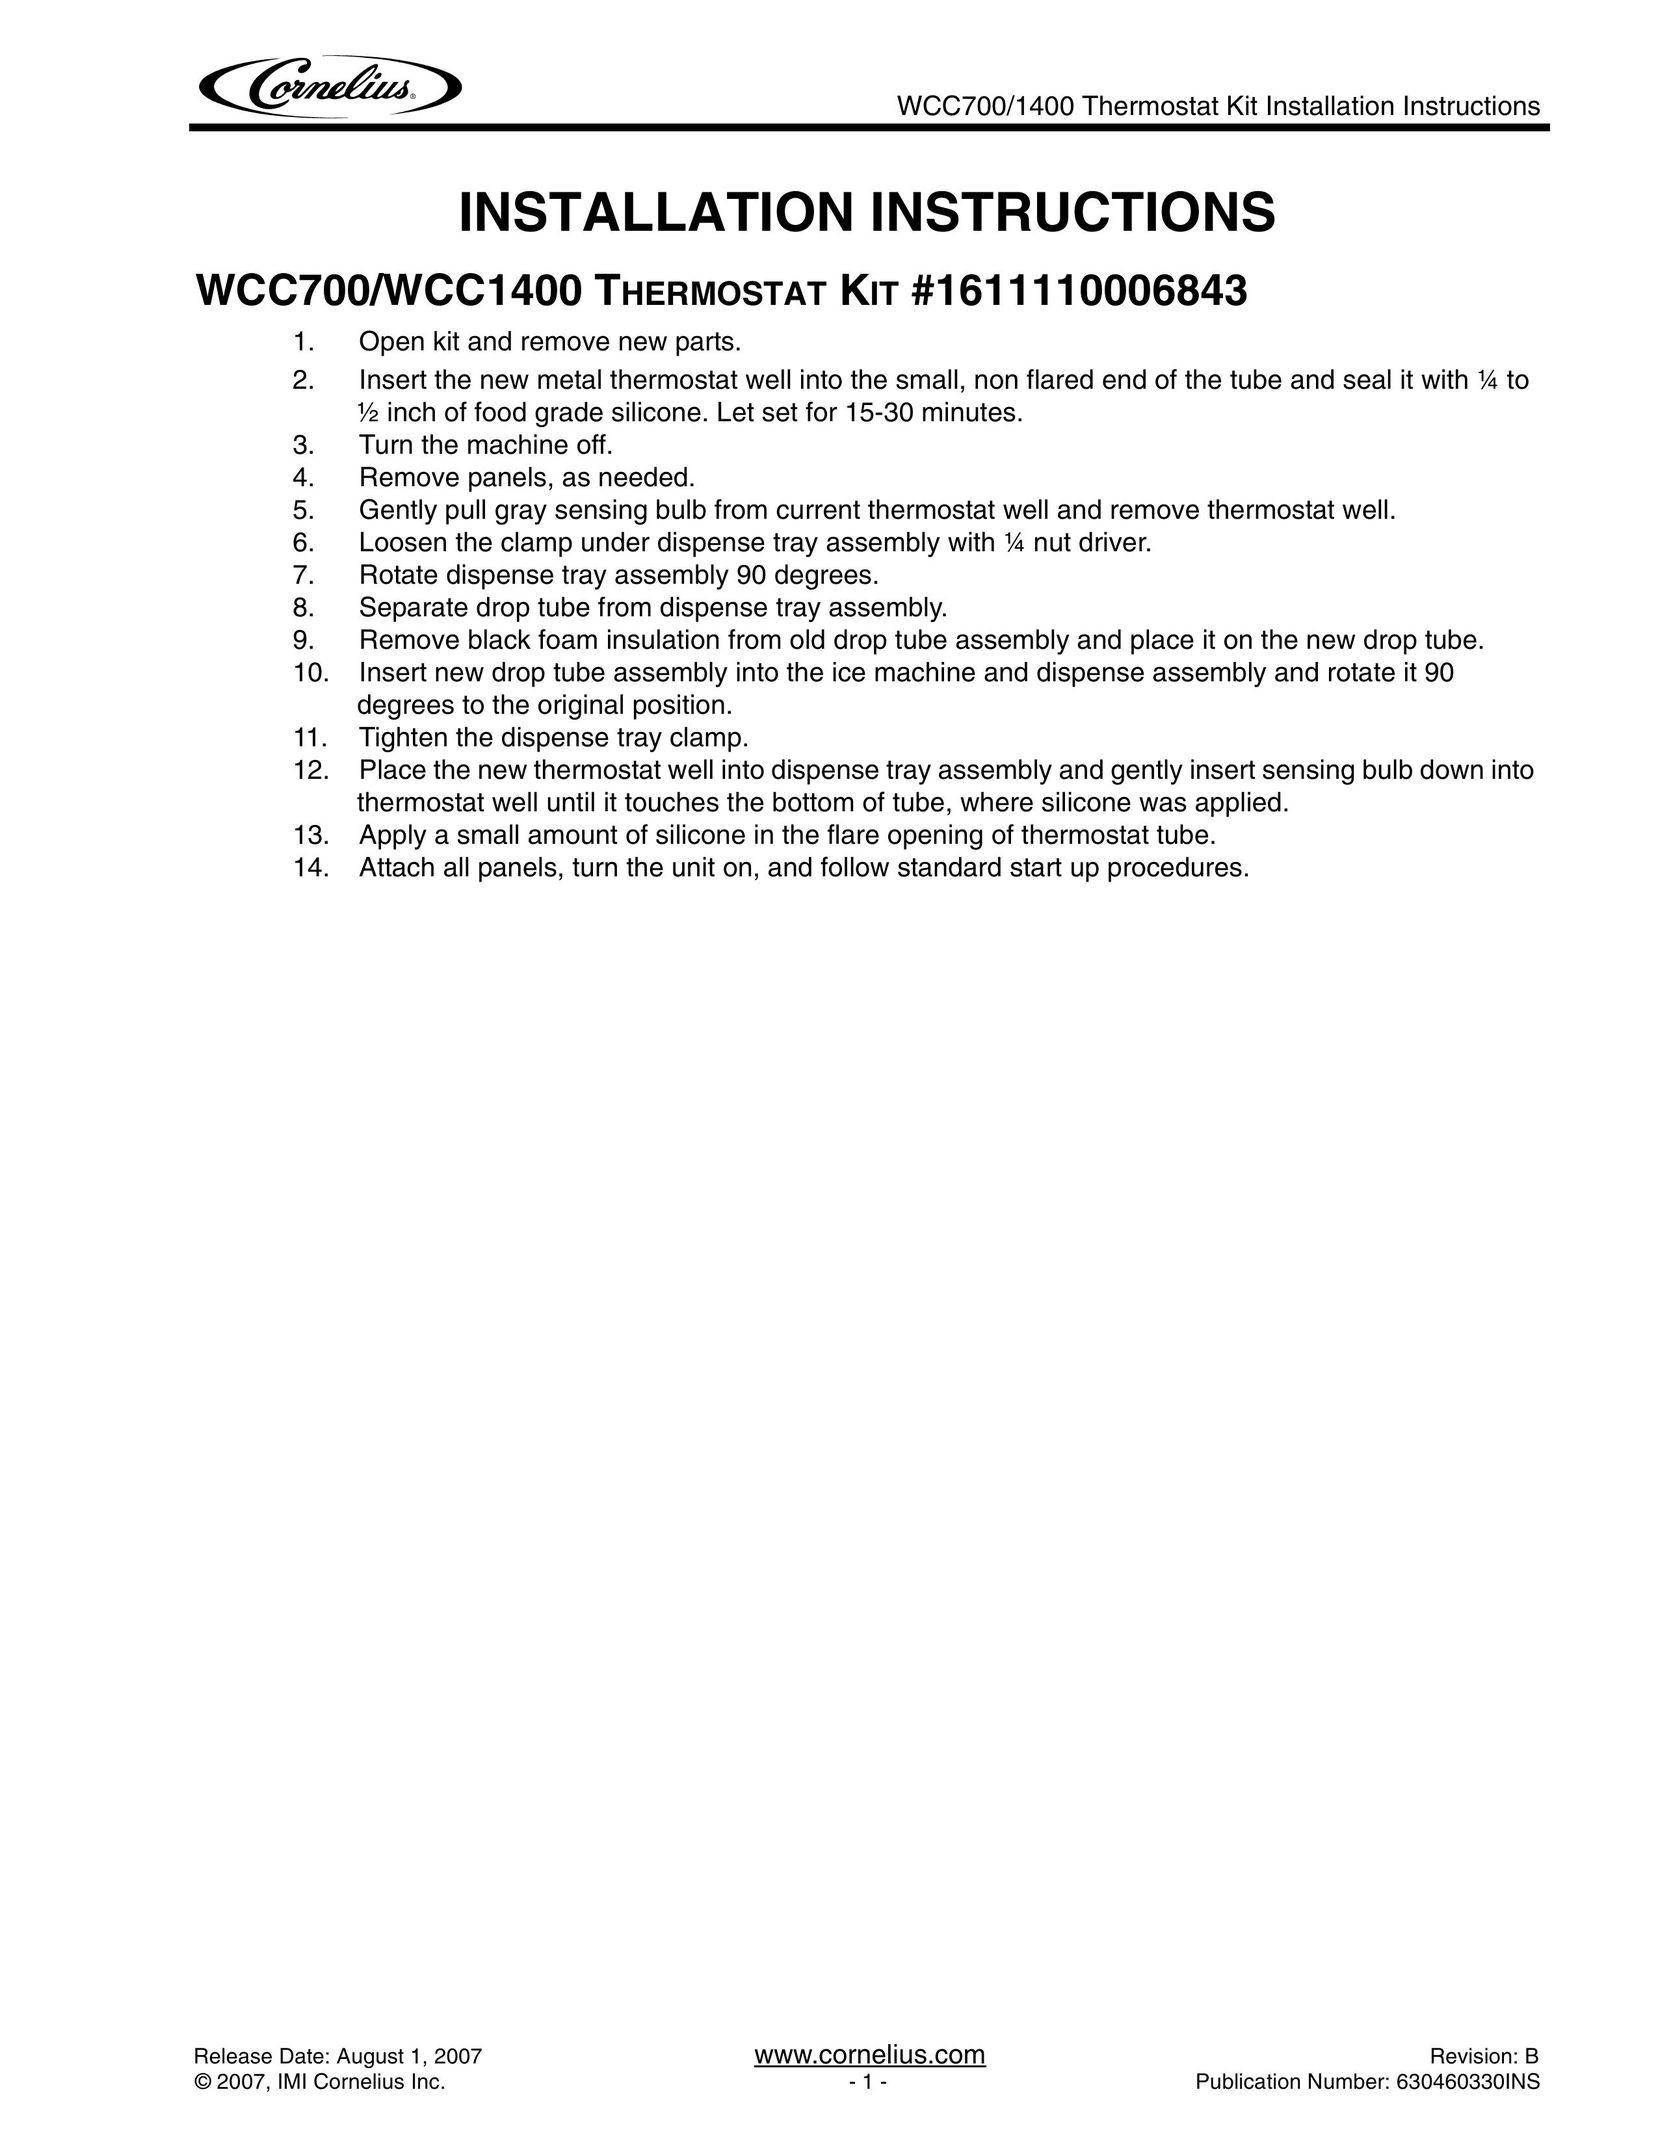 Cornelius WCC1400 Thermostat User Manual